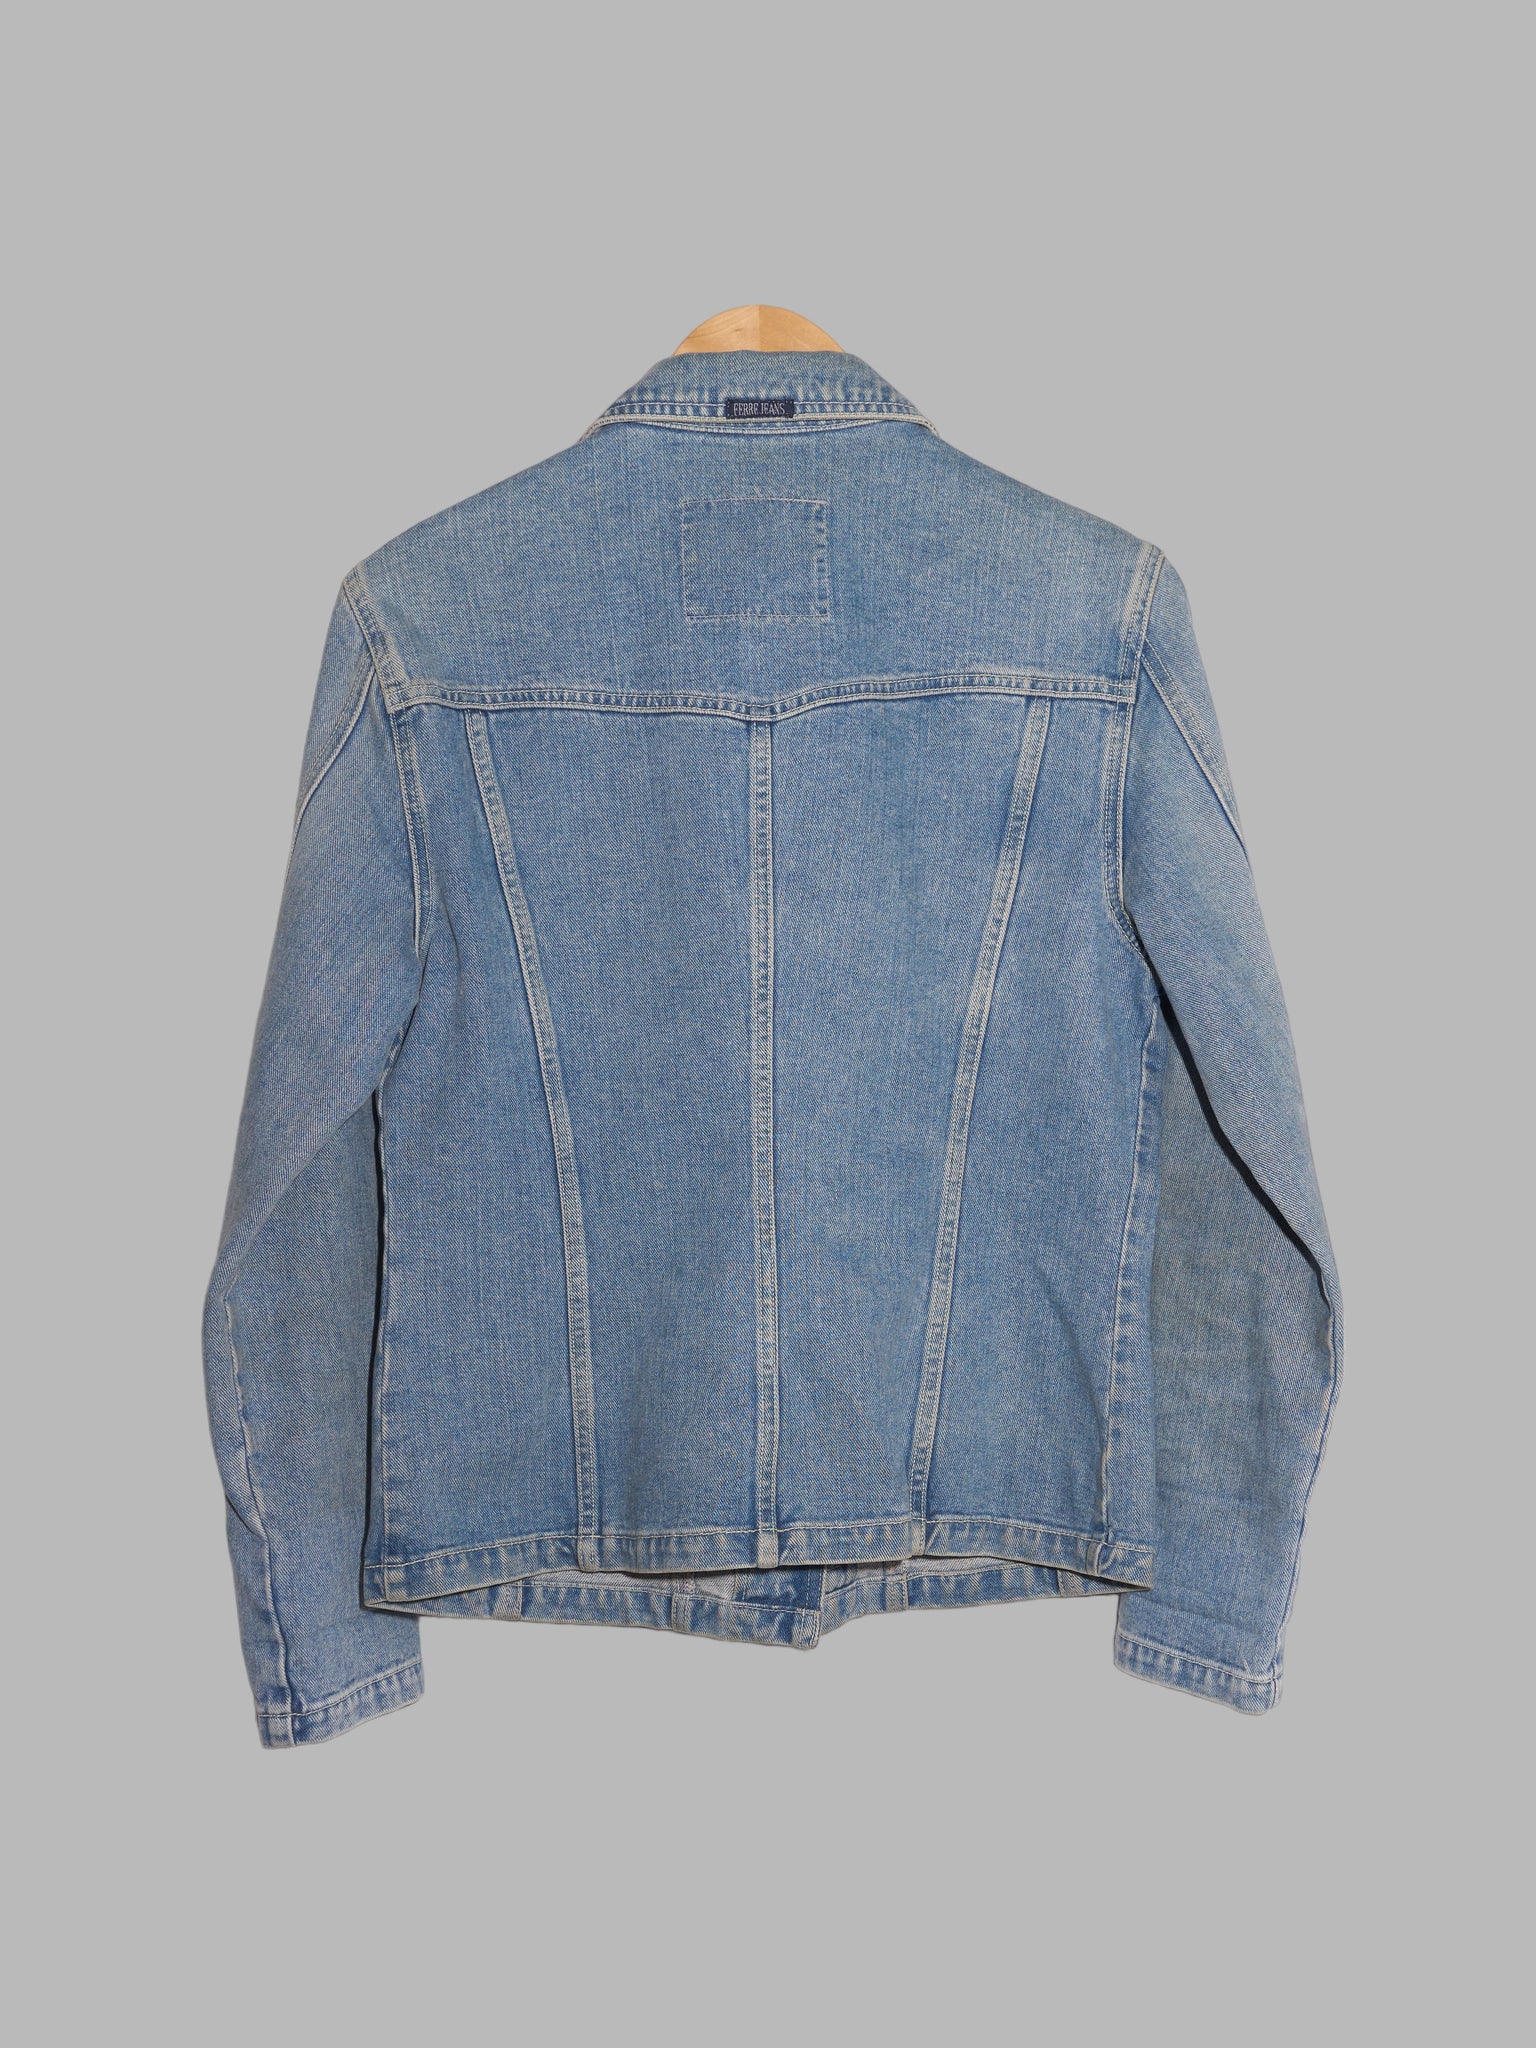 Gianfranco Ferre Jeans 1990s faded washed blue panelled denim jacket